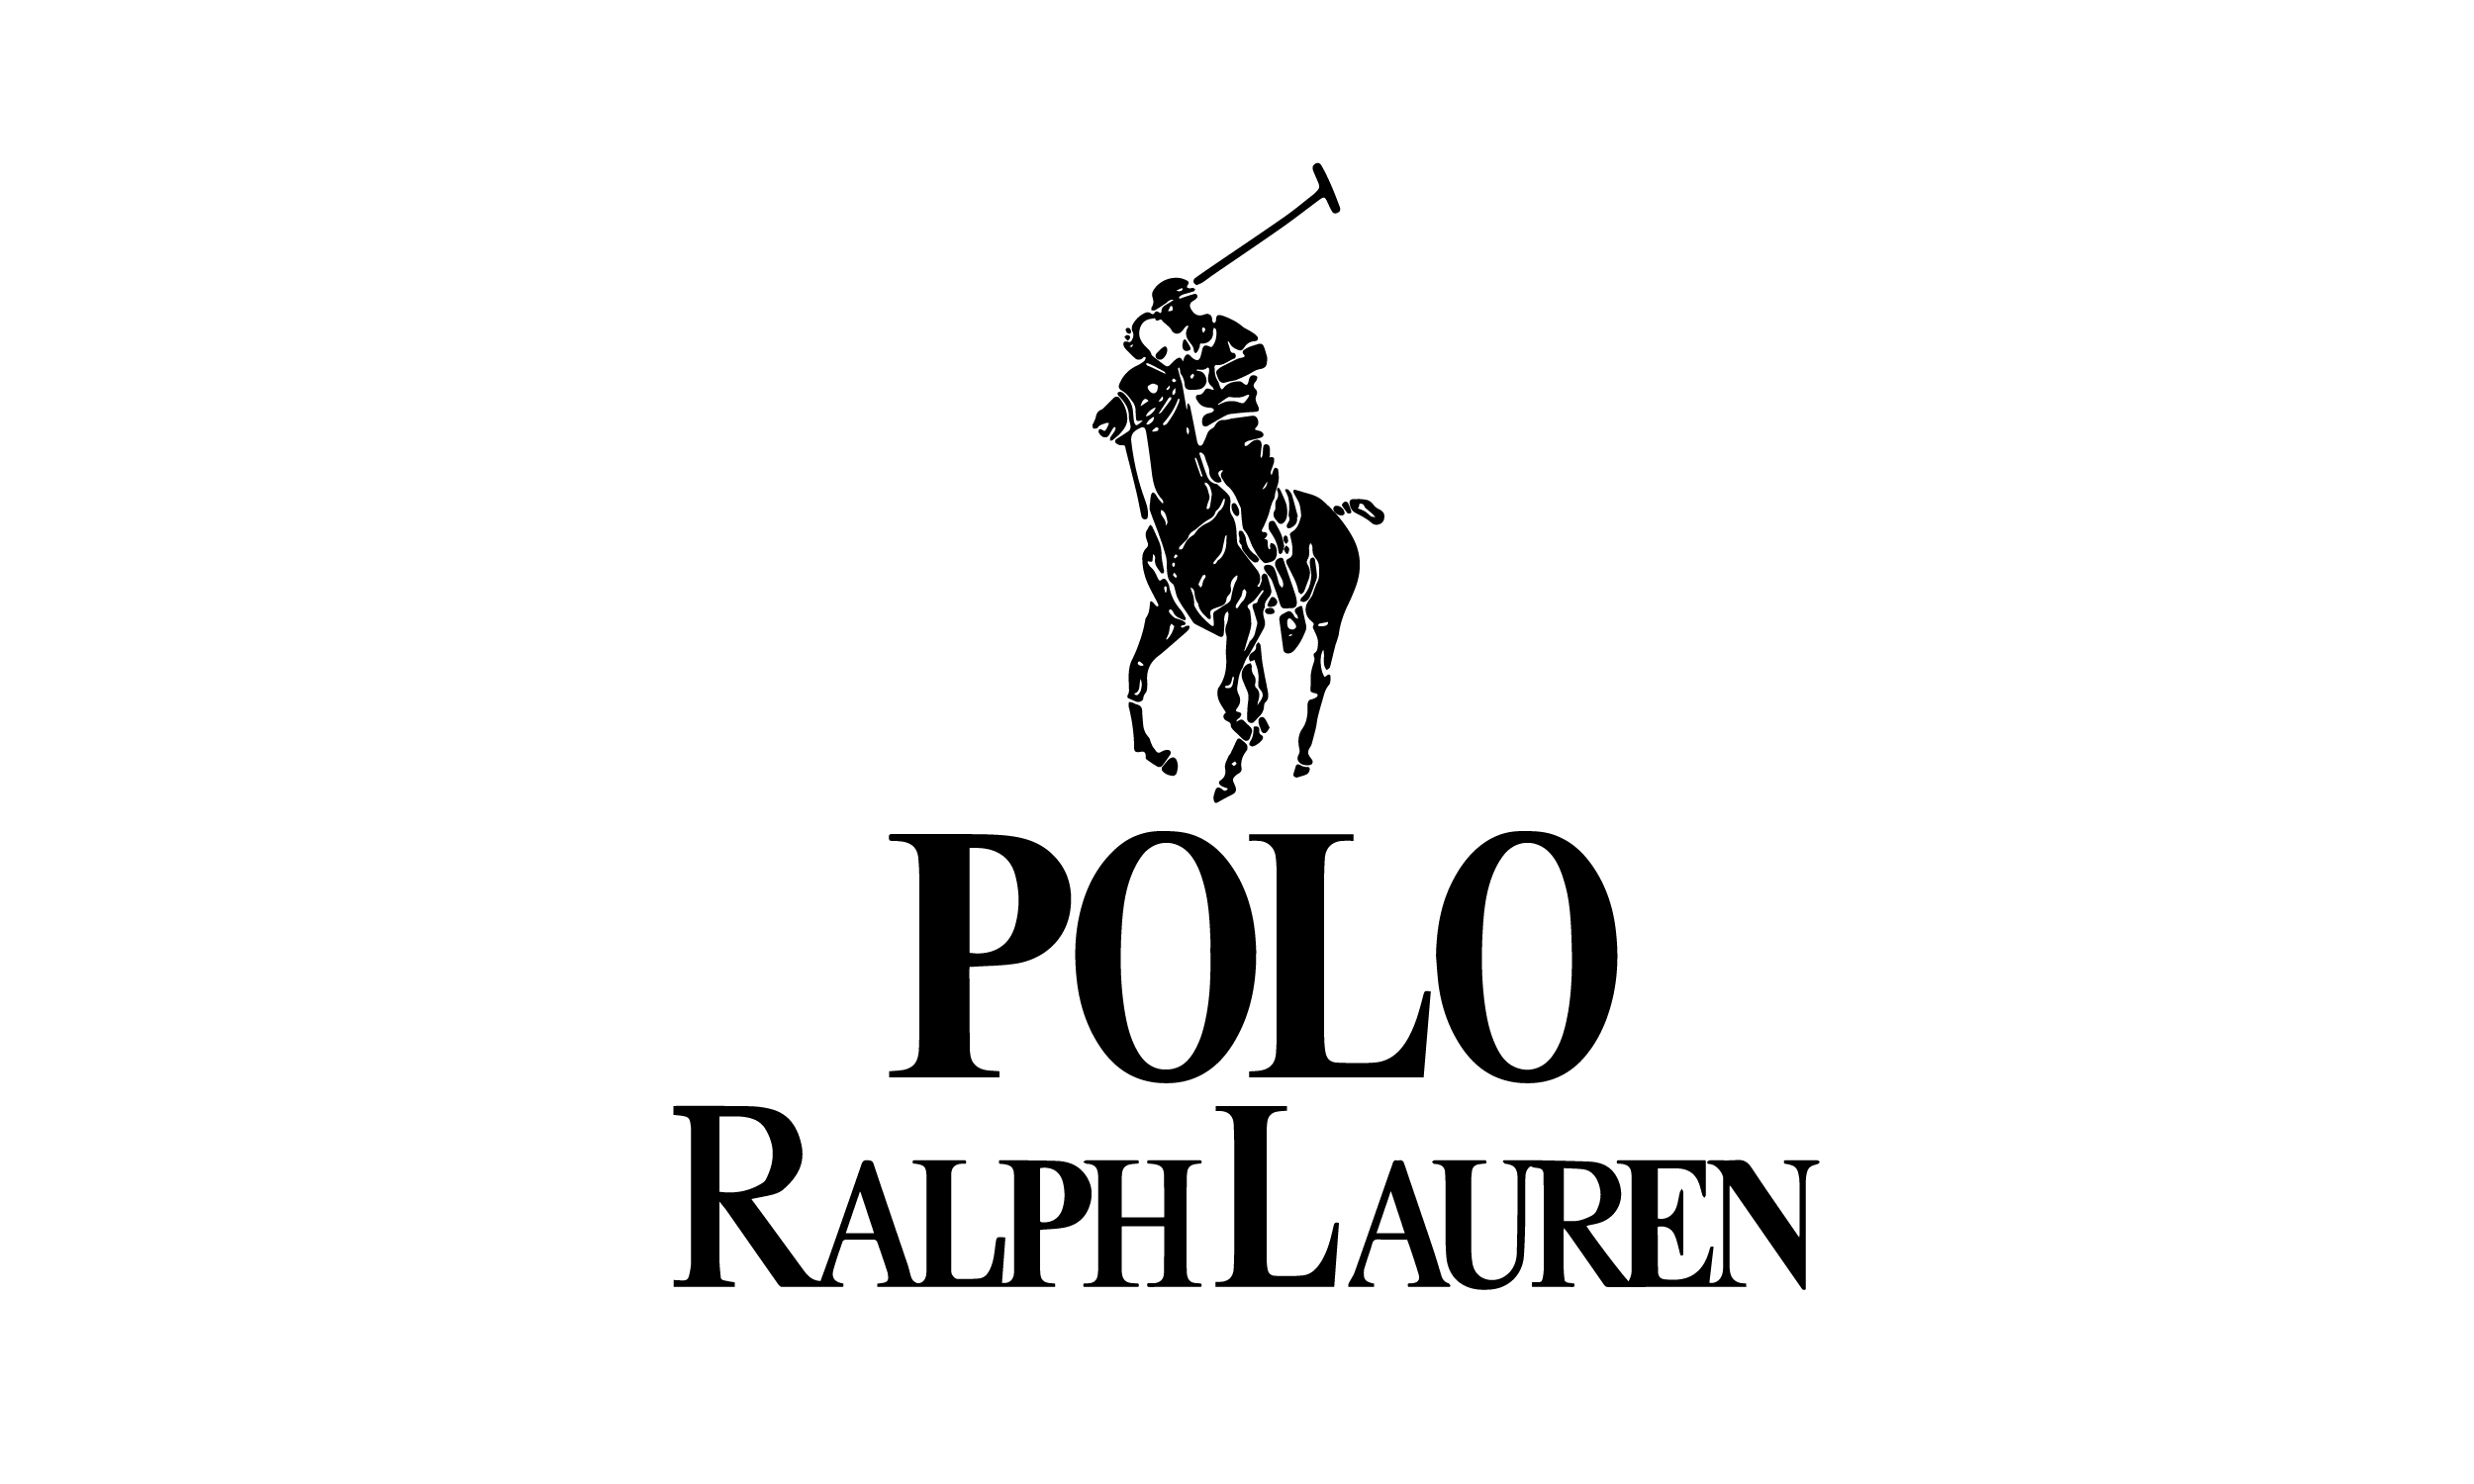 Polo Ralph Lauren Logo Png - Free Logo Image